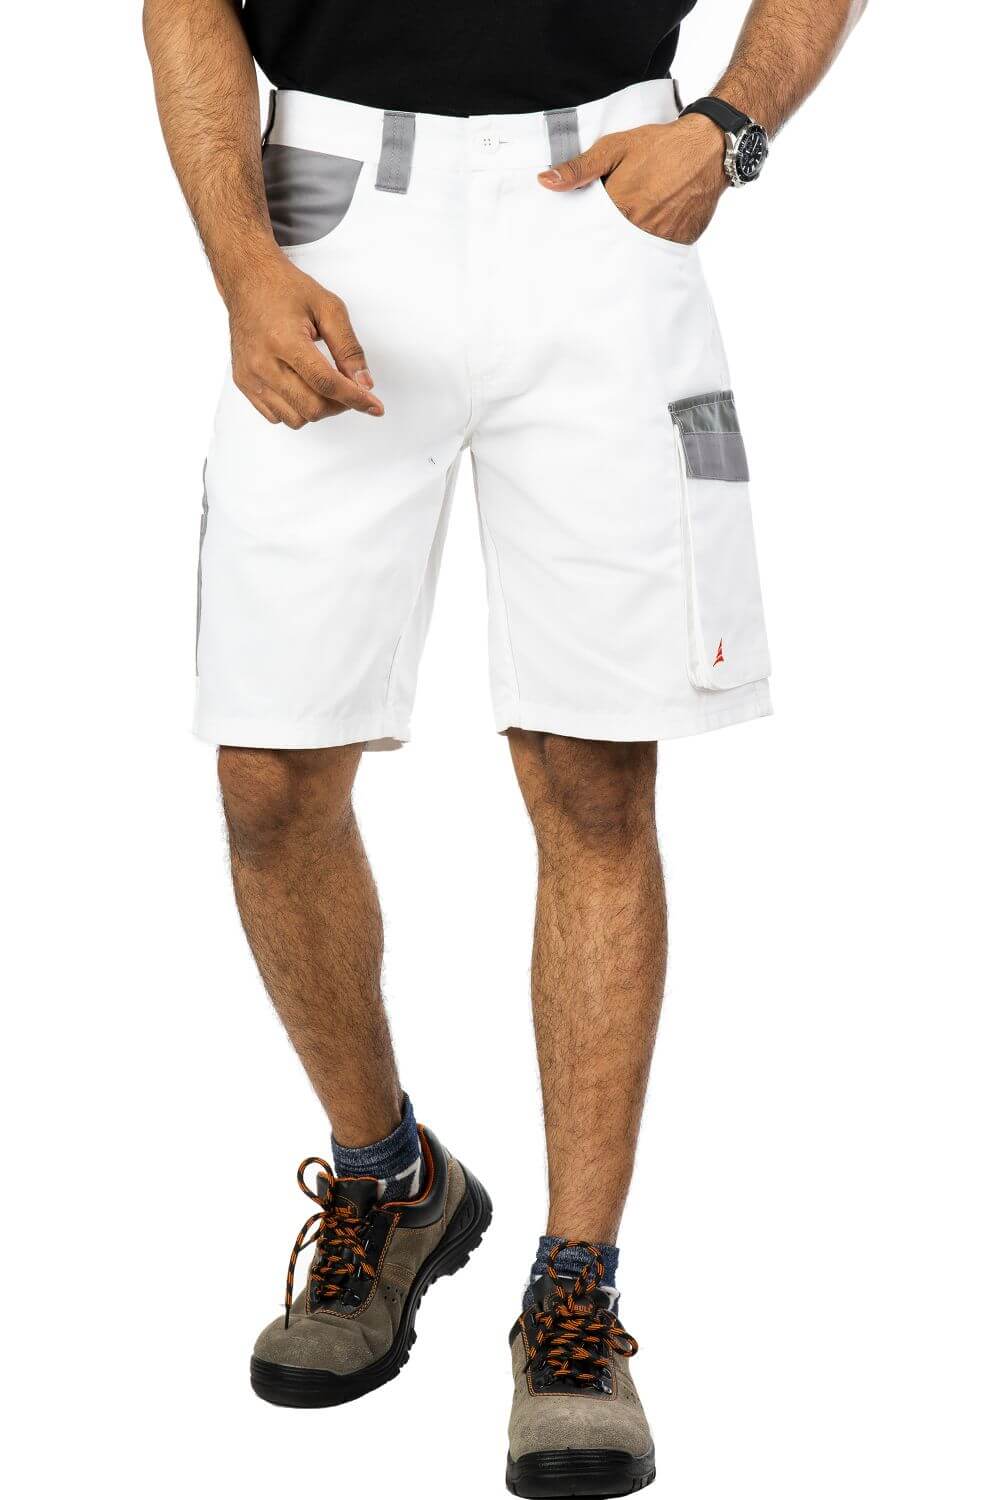 industrial design ergonomic white-grey shorts